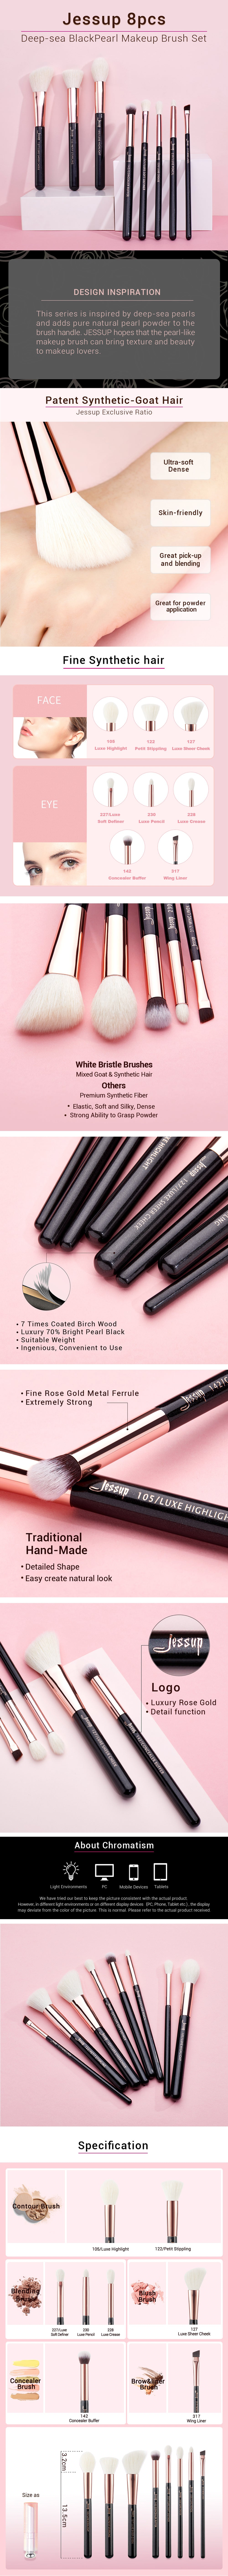 Black Essential Makeup Brush Set 8 pcs - Jessup